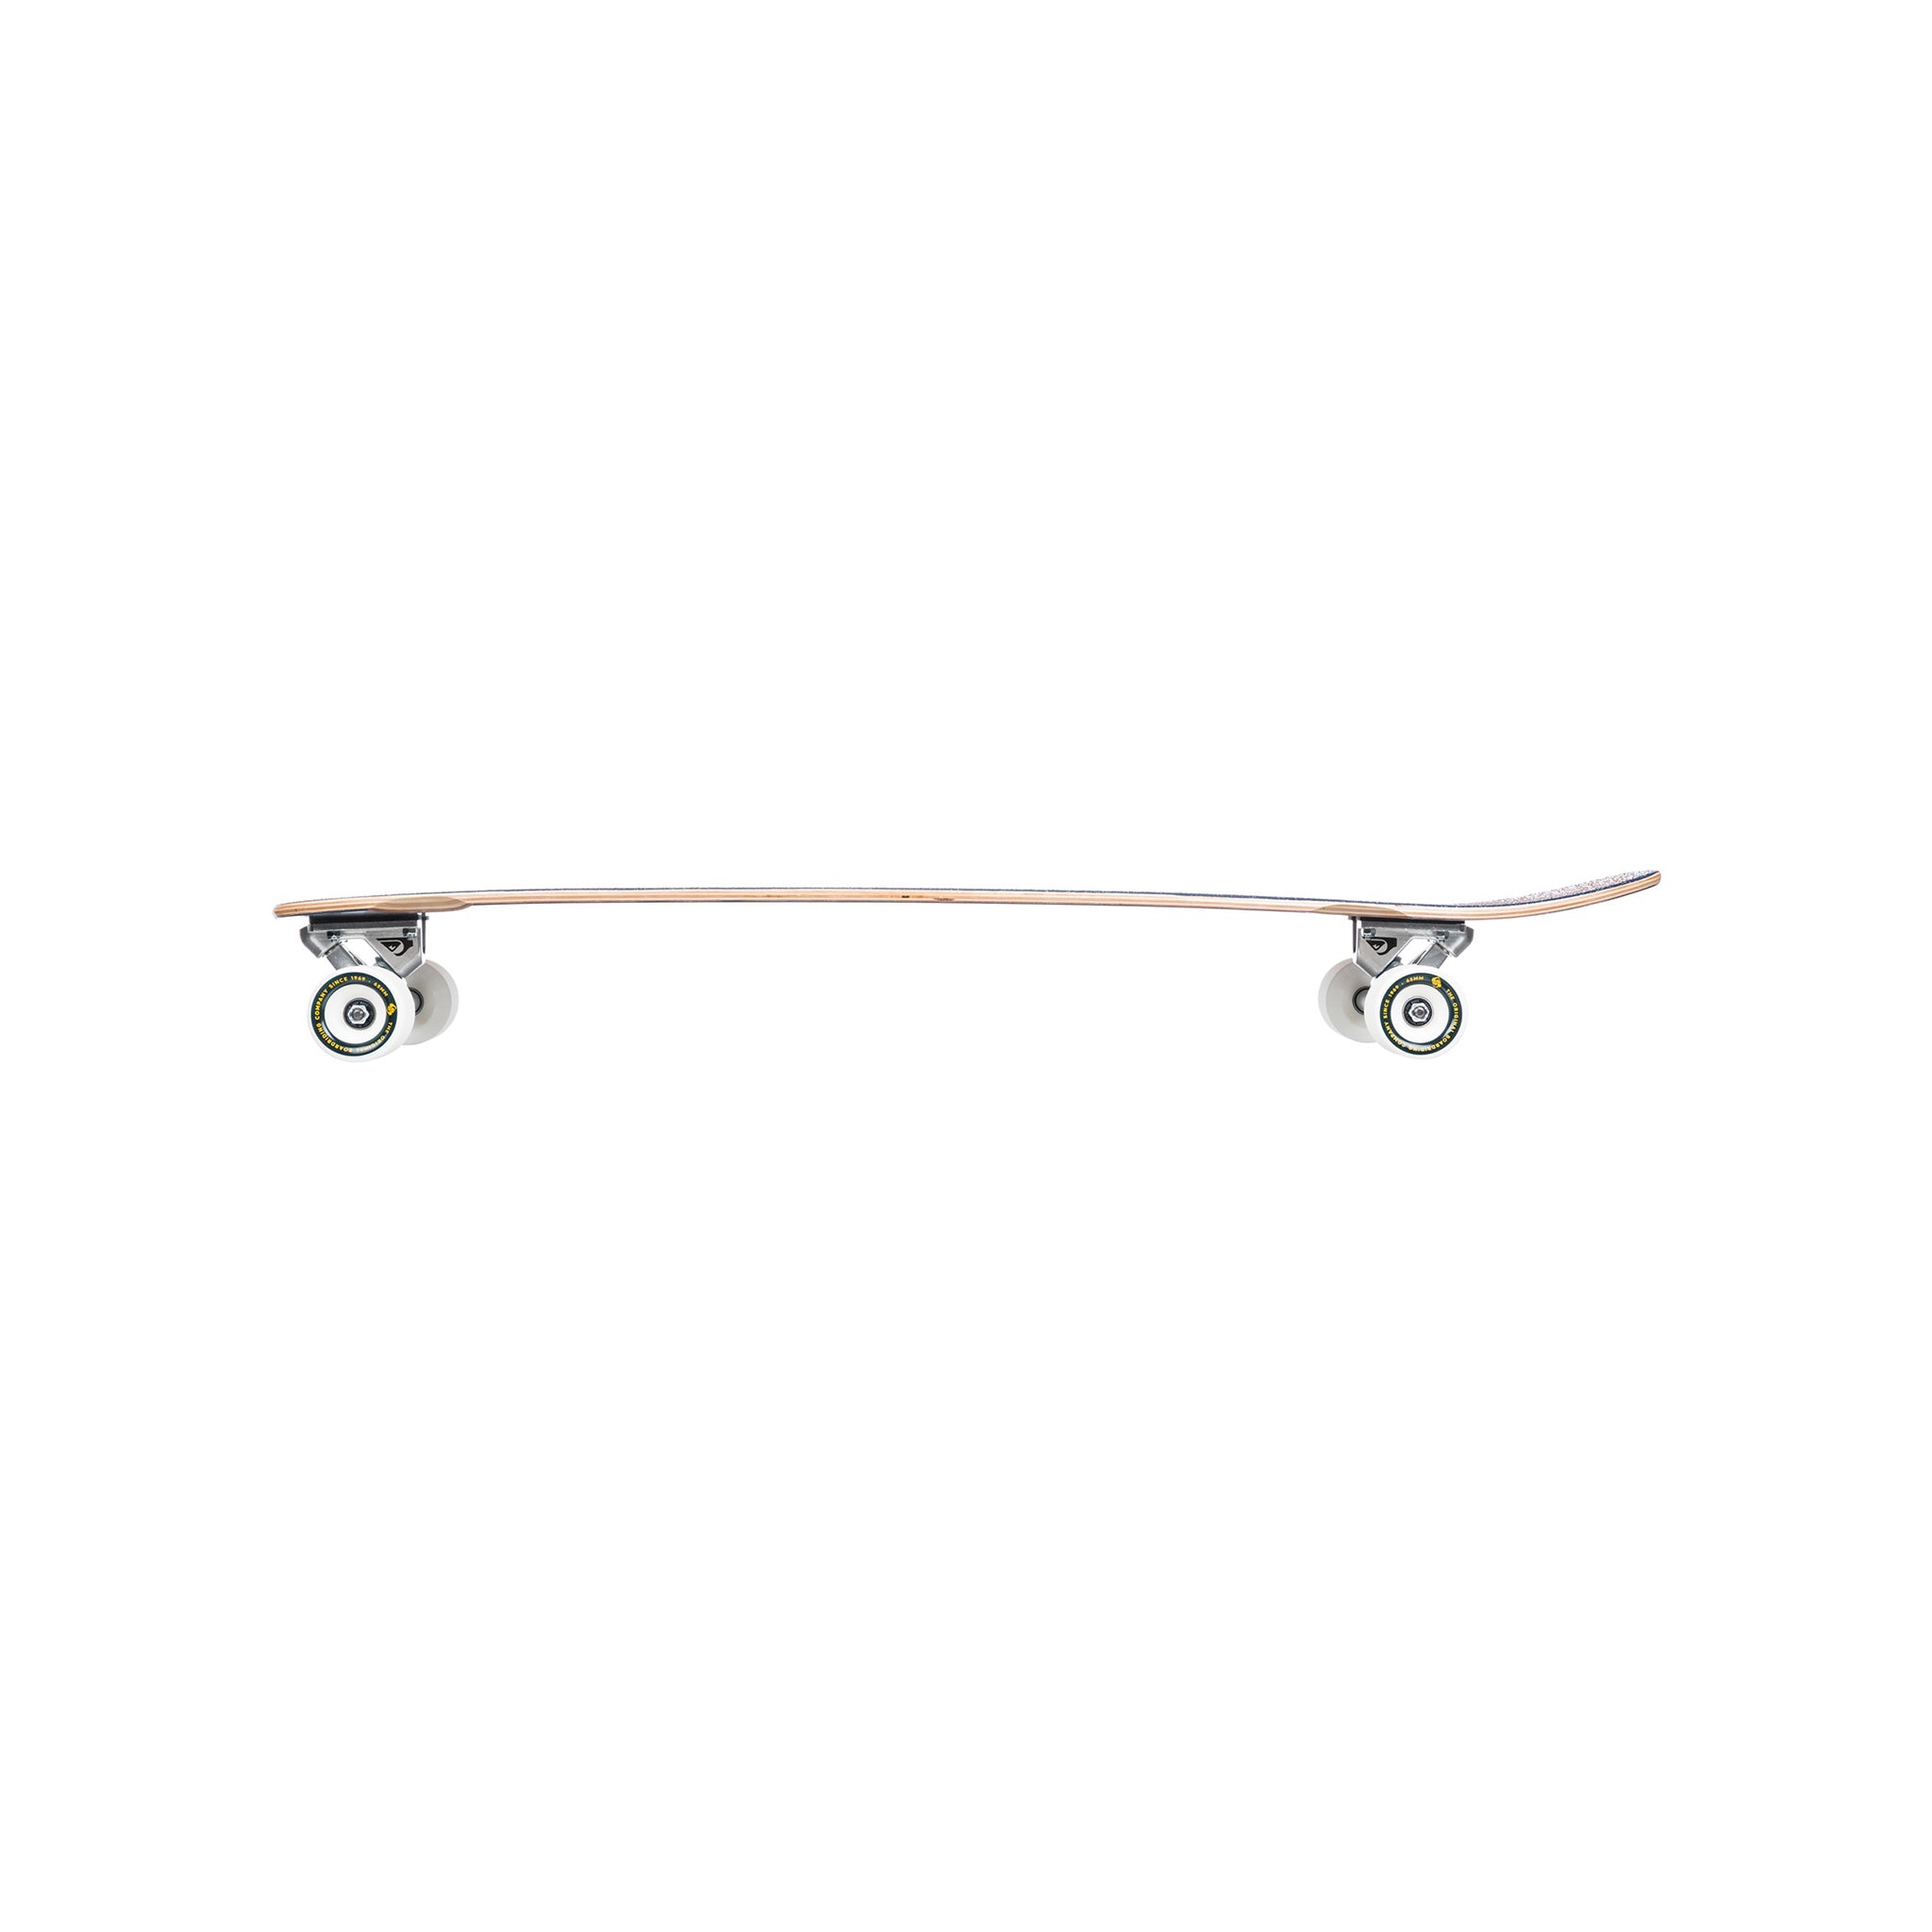 Quiksilver Skateboard Slide